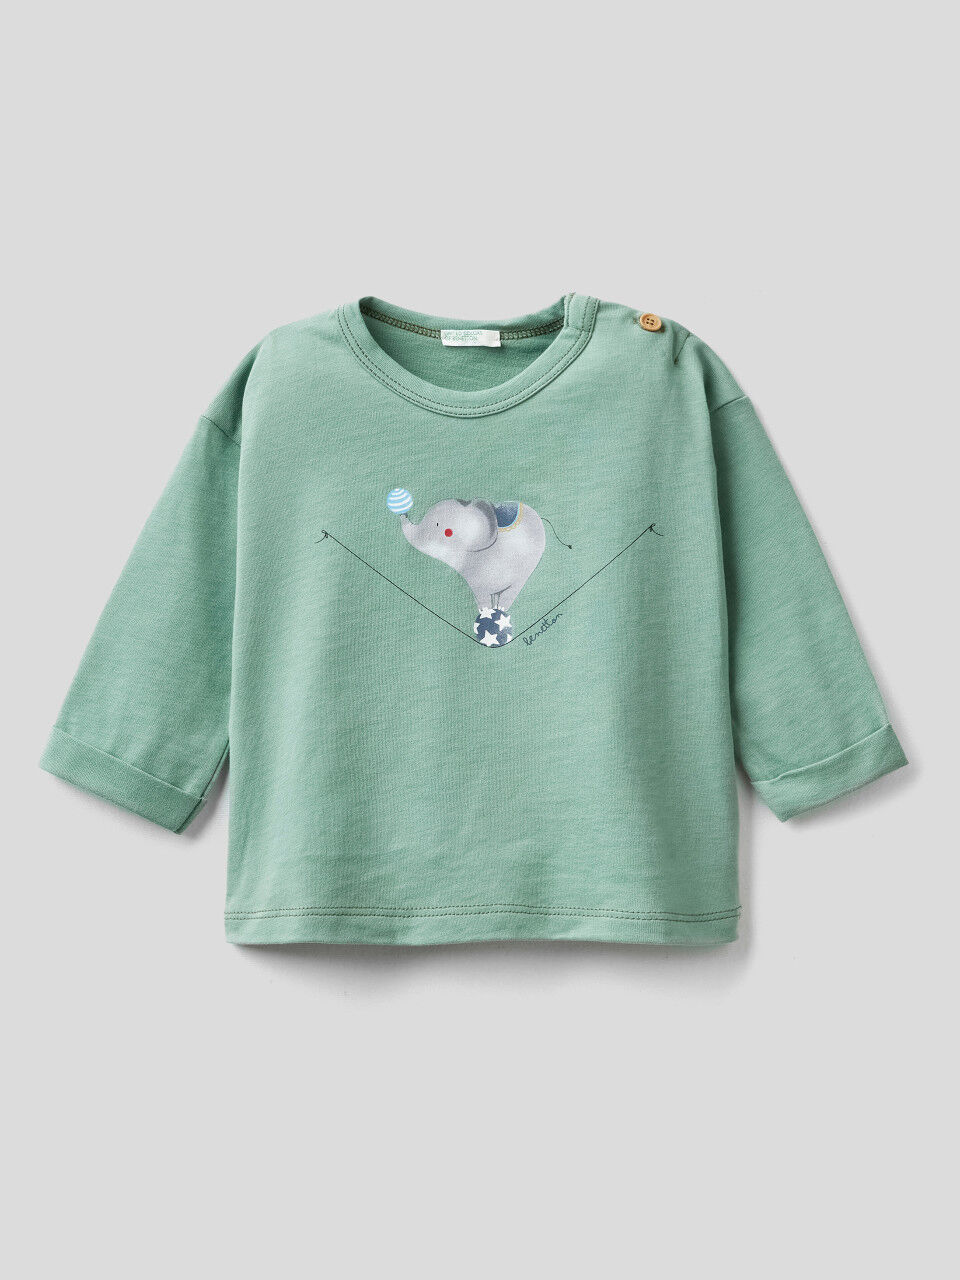 Bébé Garçon Dinosaure Pullover tricoté Pulls Tops T-Shirt Sweatshirt 2-7Y 